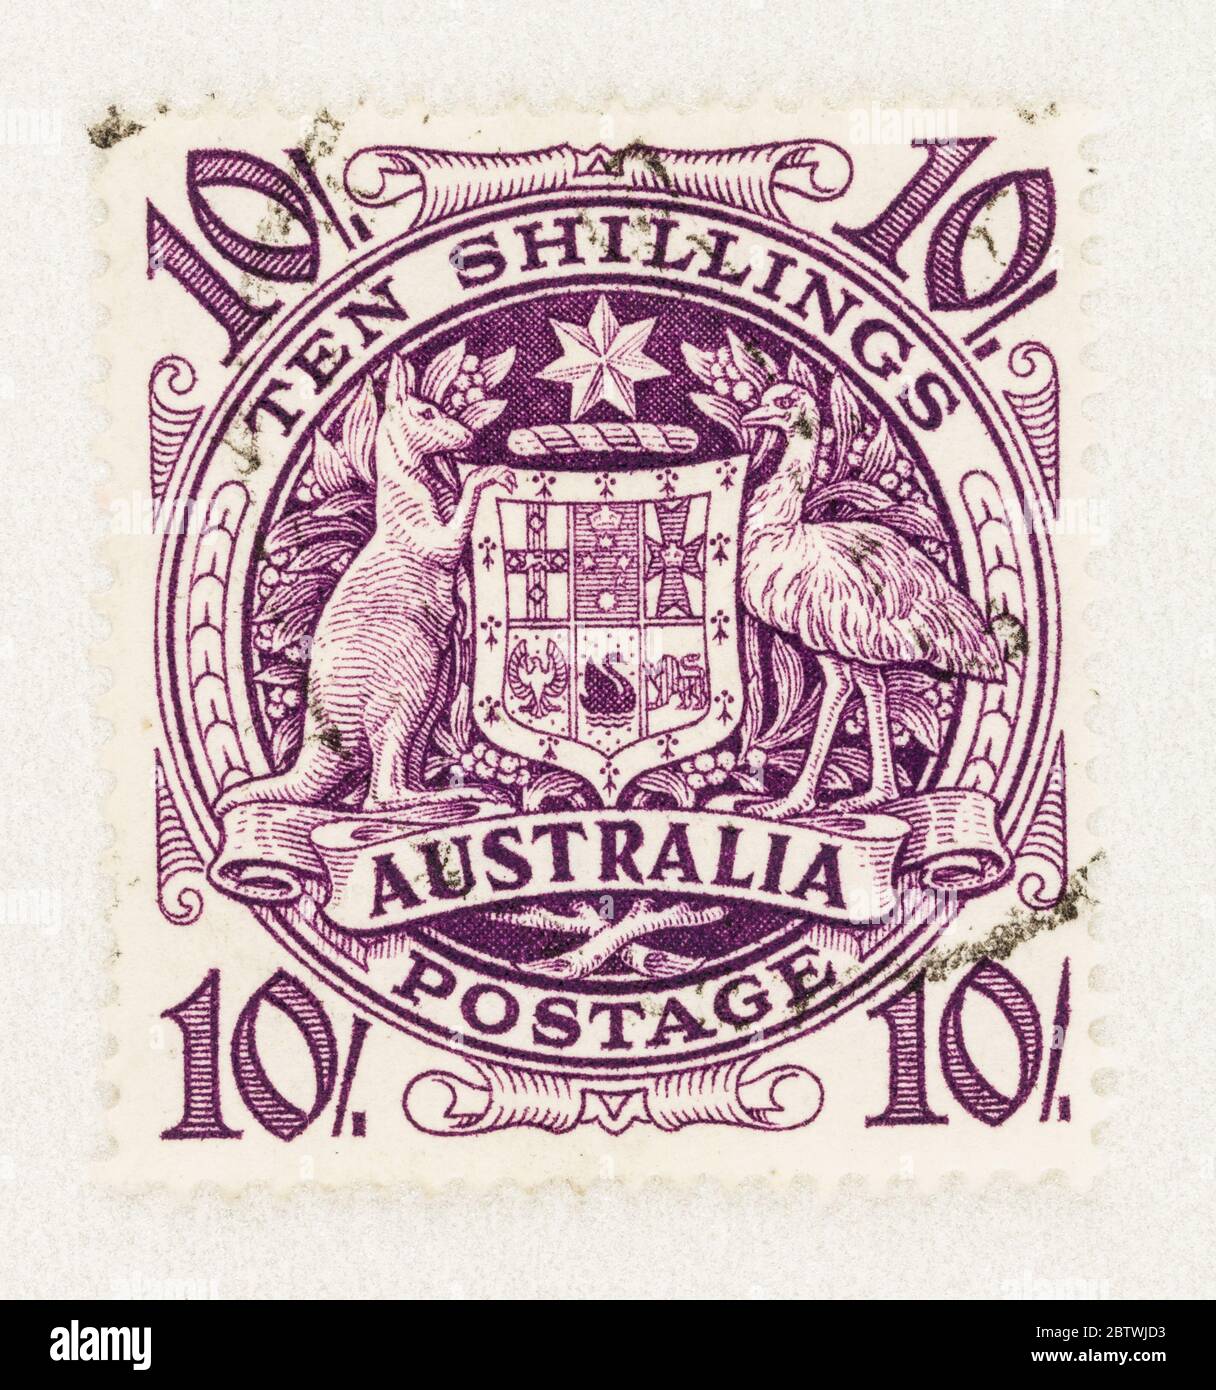 SEATTLE WASHINGTON - May 27, 2020:  Australian Coat of Arms 10 shilling stamp featuring purple shield, kangaroo and emu. Scott # 219 Stock Photo